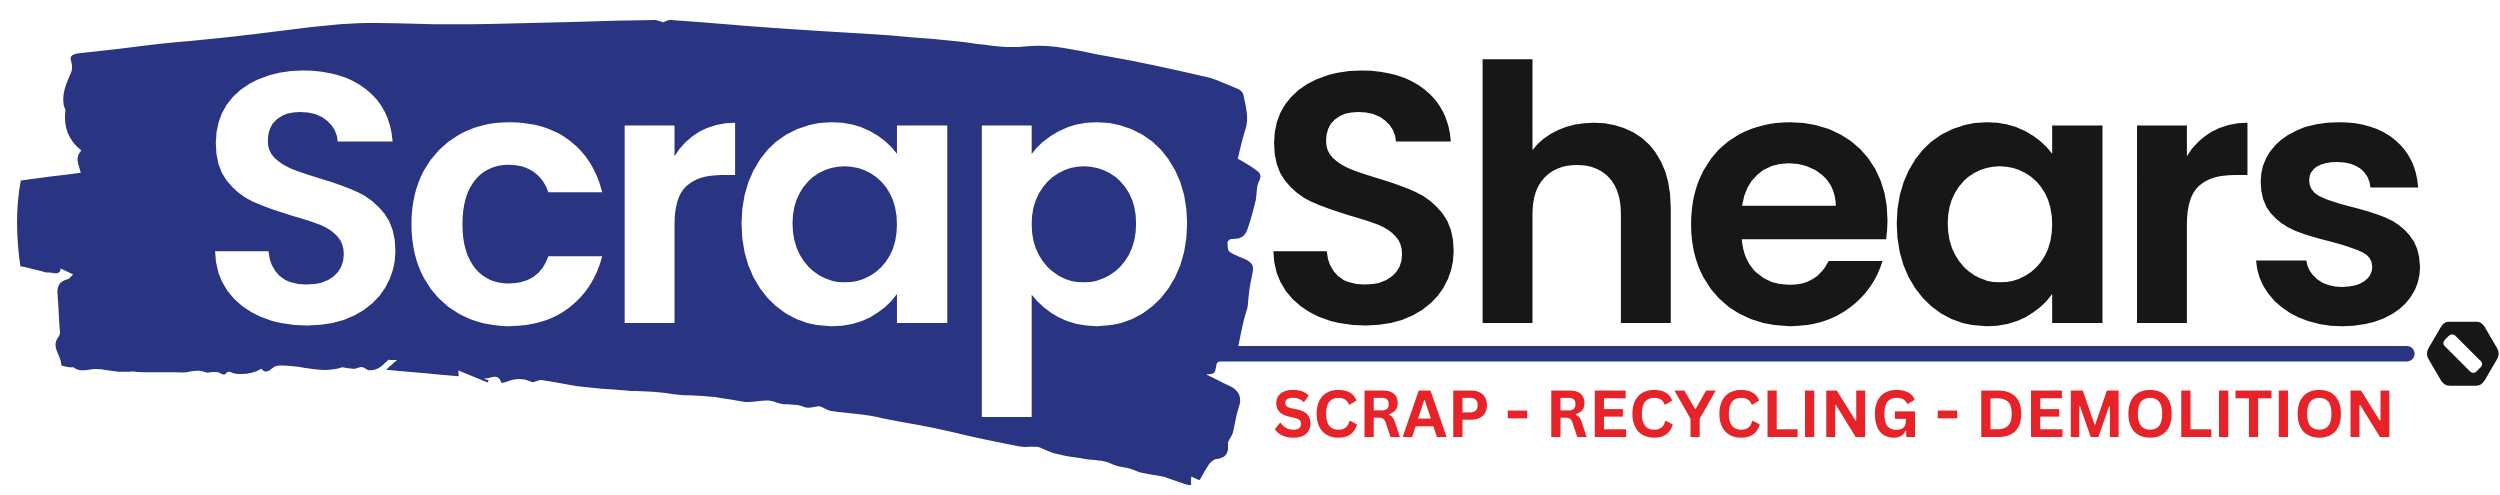 Logo Website Scrap Shears